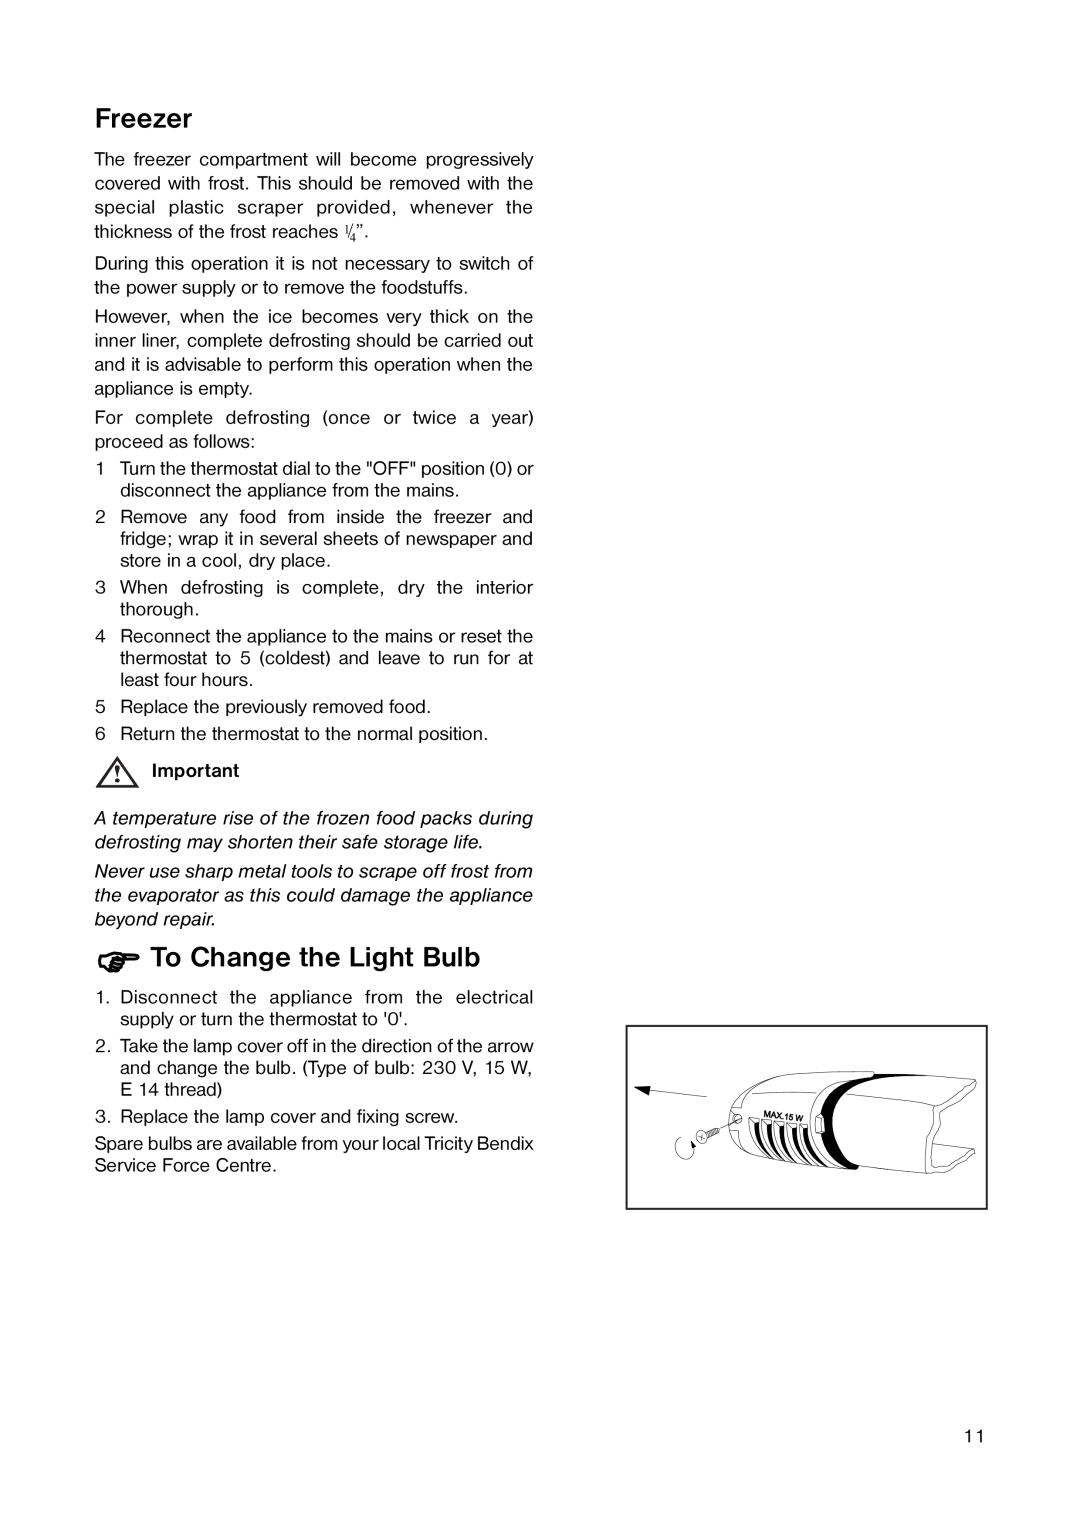 Tricity Bendix TB 117 FF installation instructions Freezer, Φ To Change the Light Bulb 